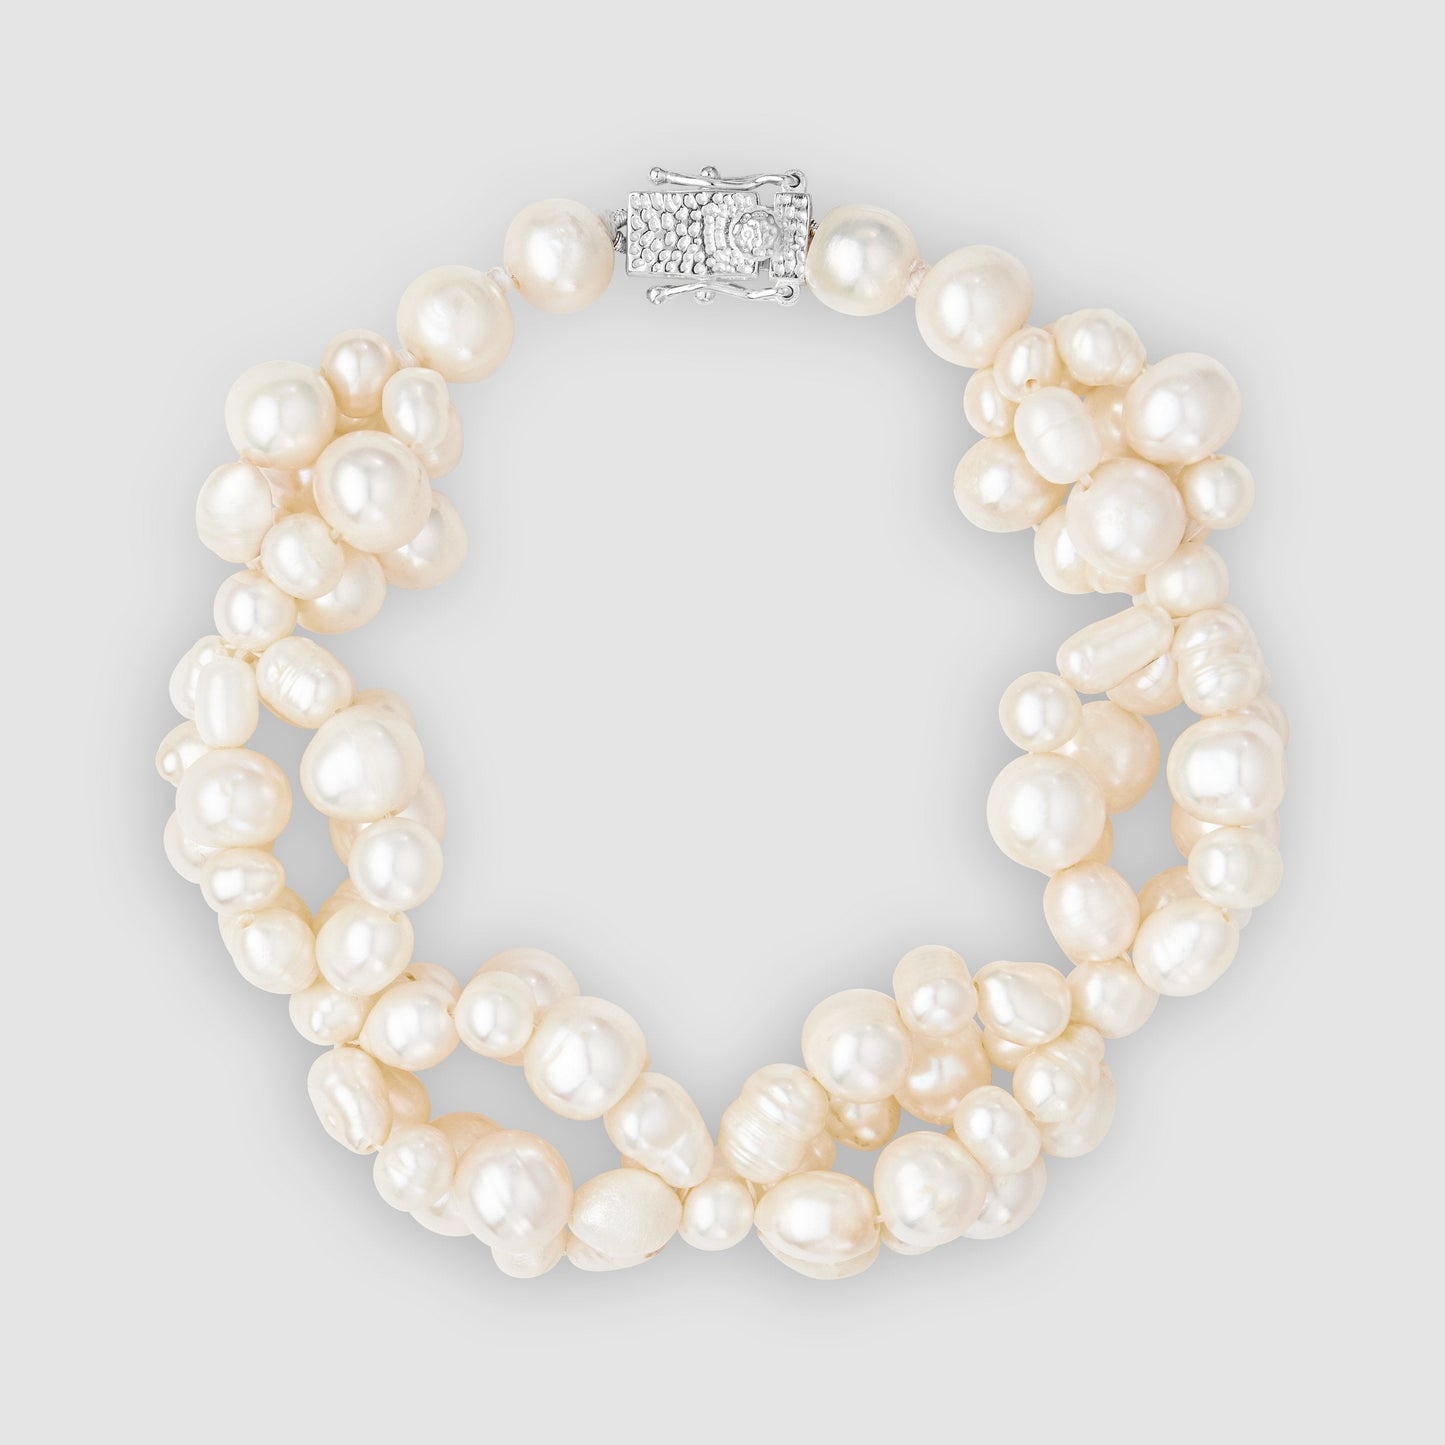 The Antique Hanging Pearl Bracelet